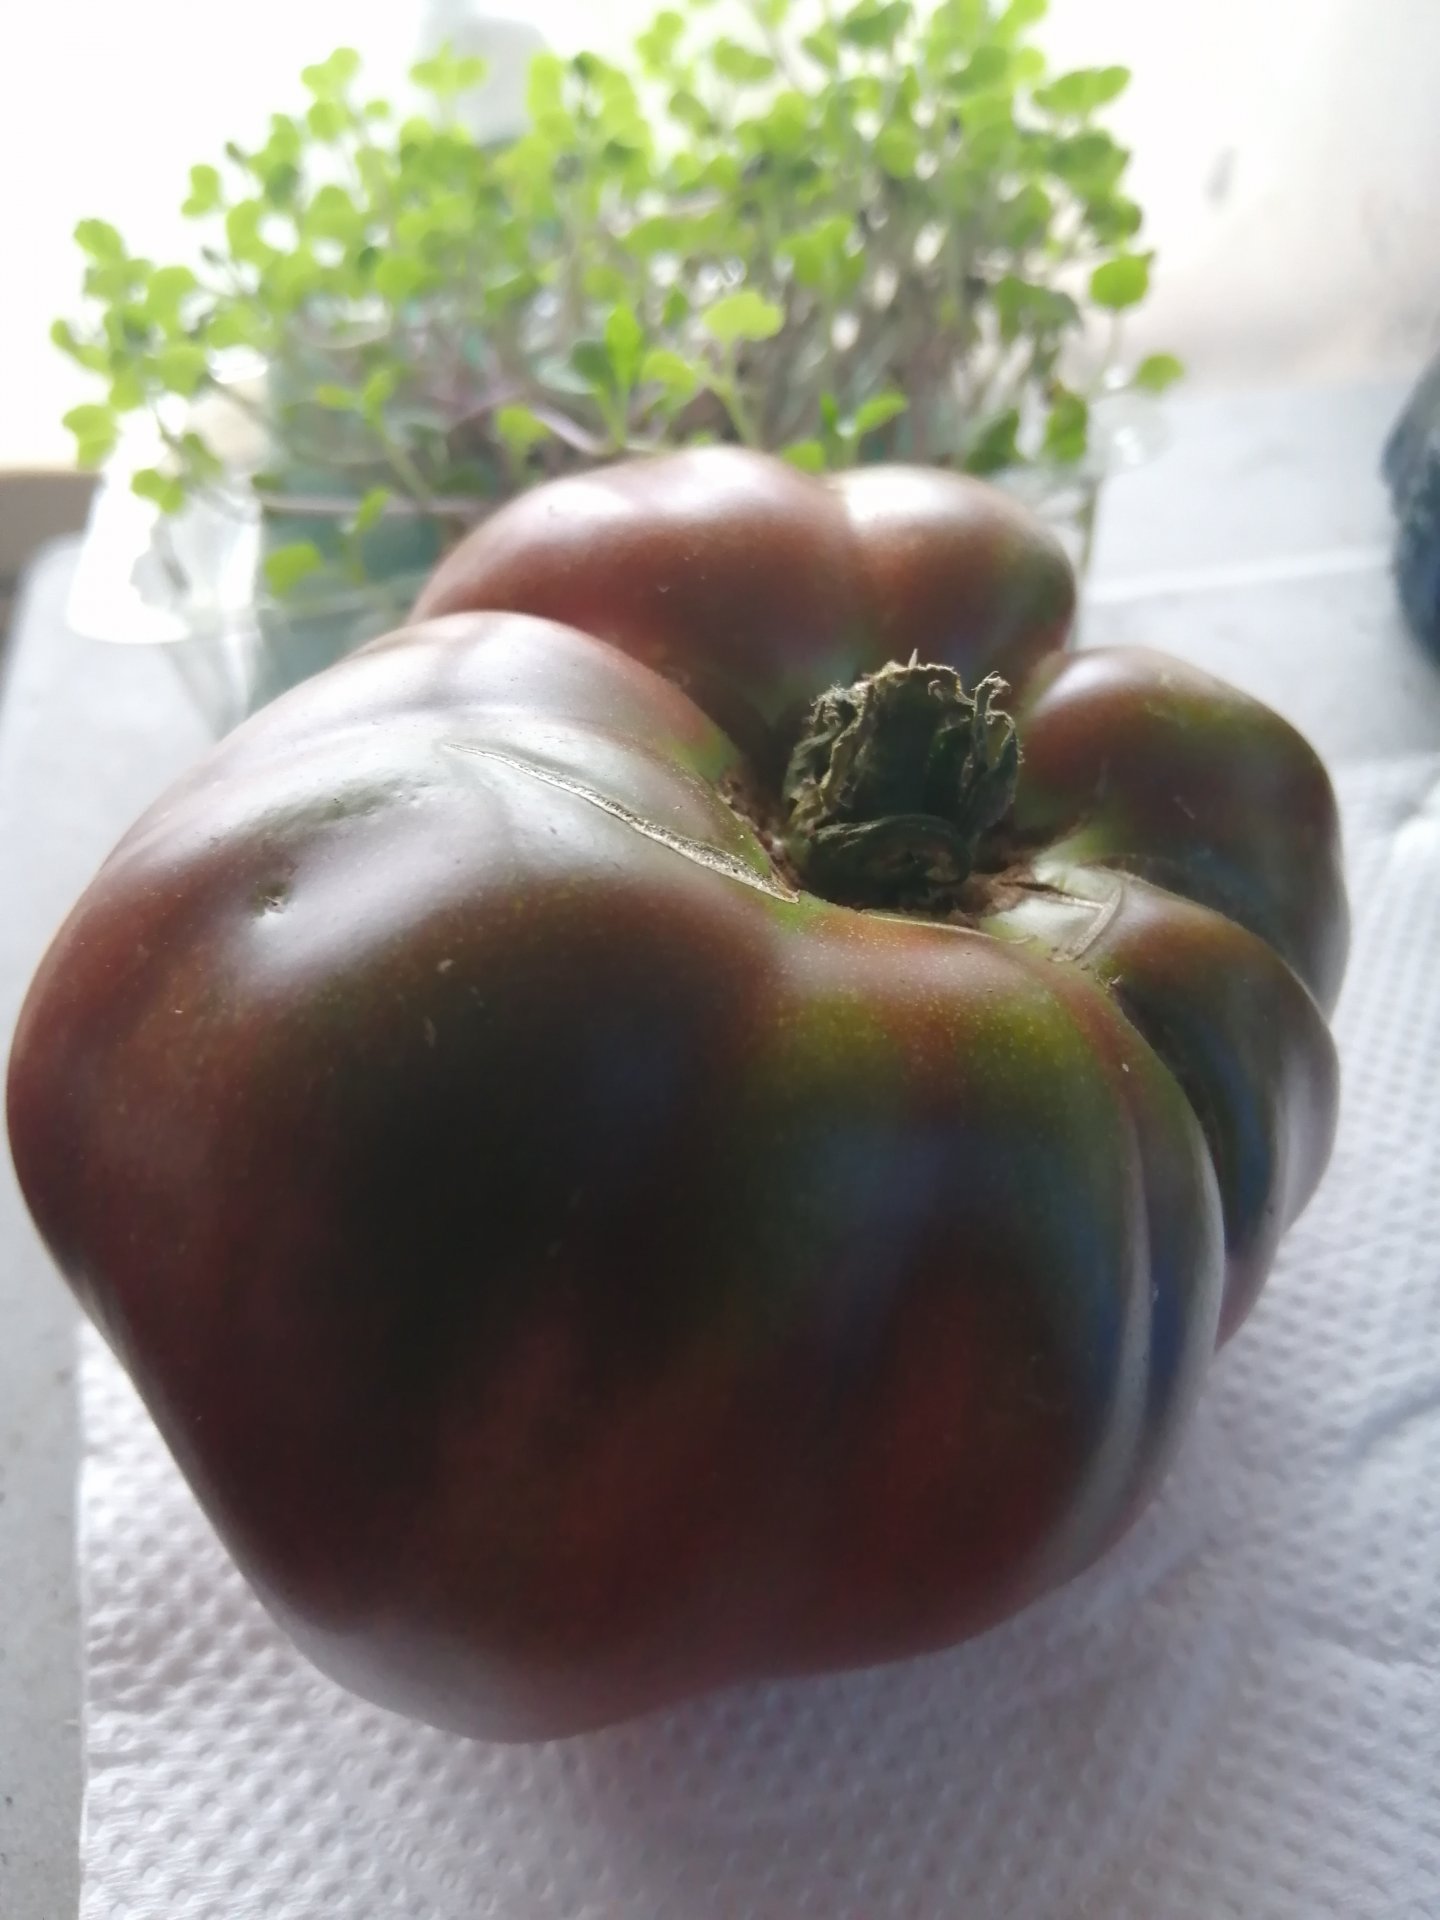 Black krim tomato